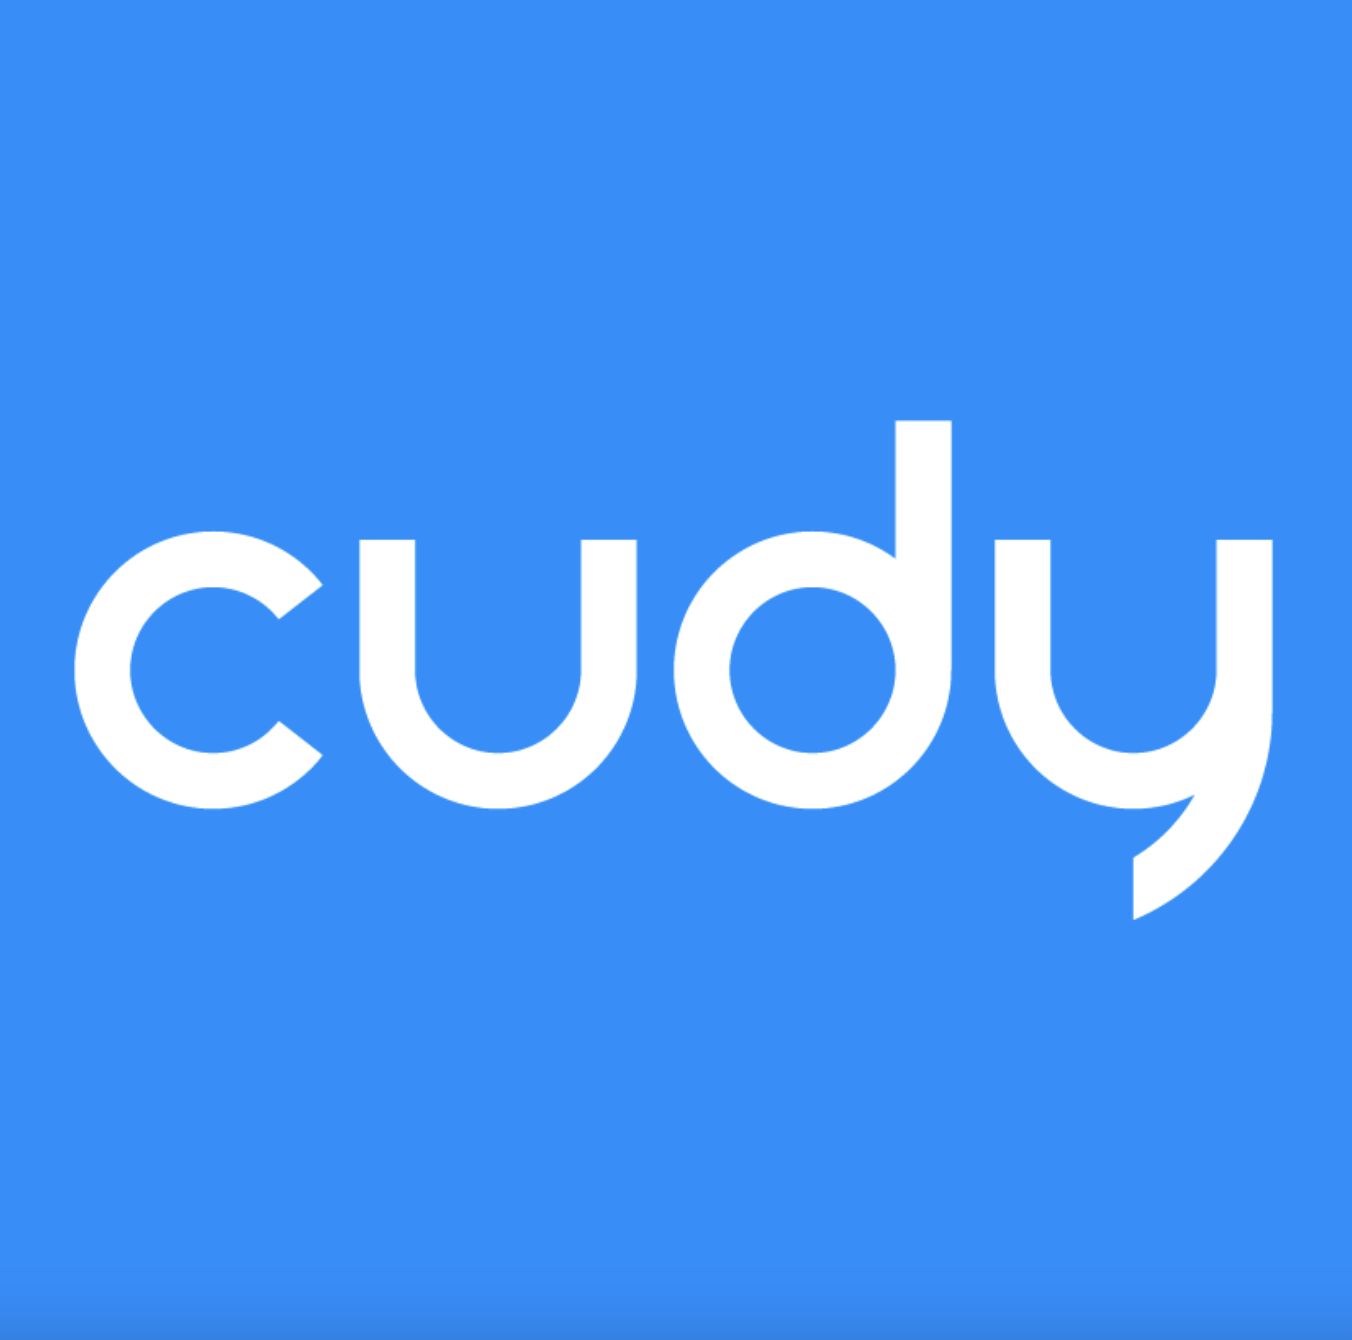 Brand: CUDY